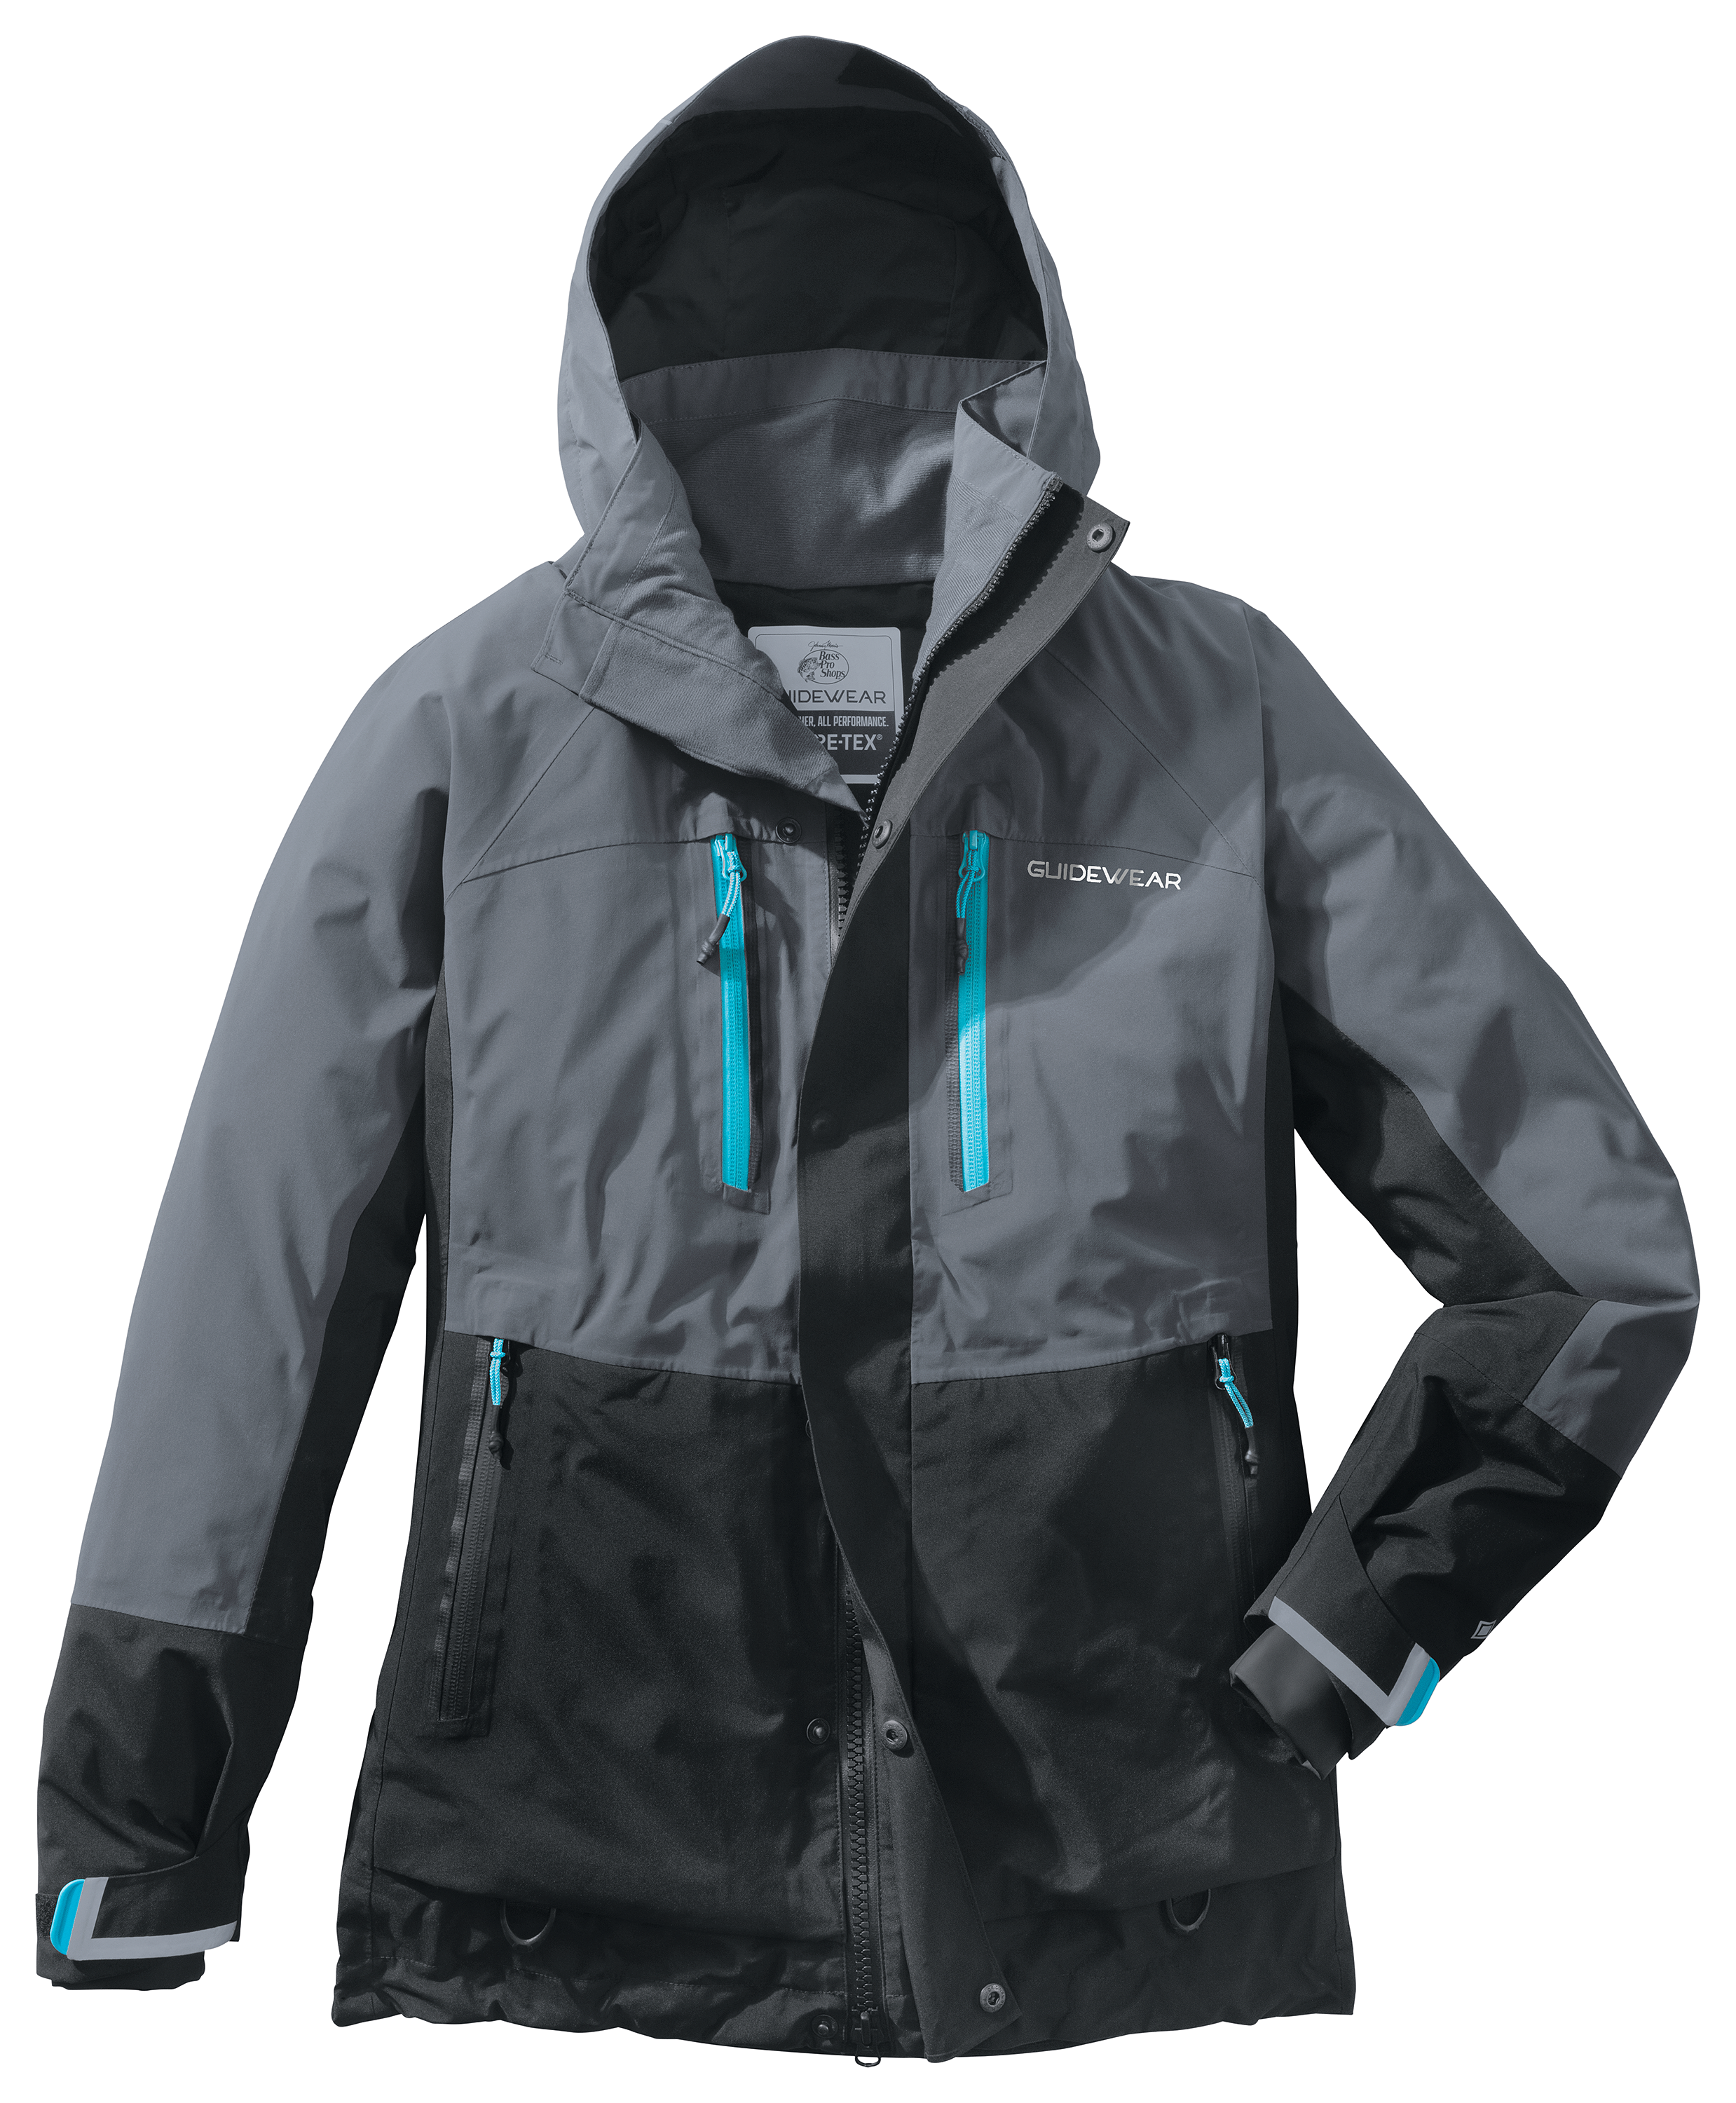 Women's Snowsport Jacket - All in Motion Jacket Coat SIze Medium NWT New